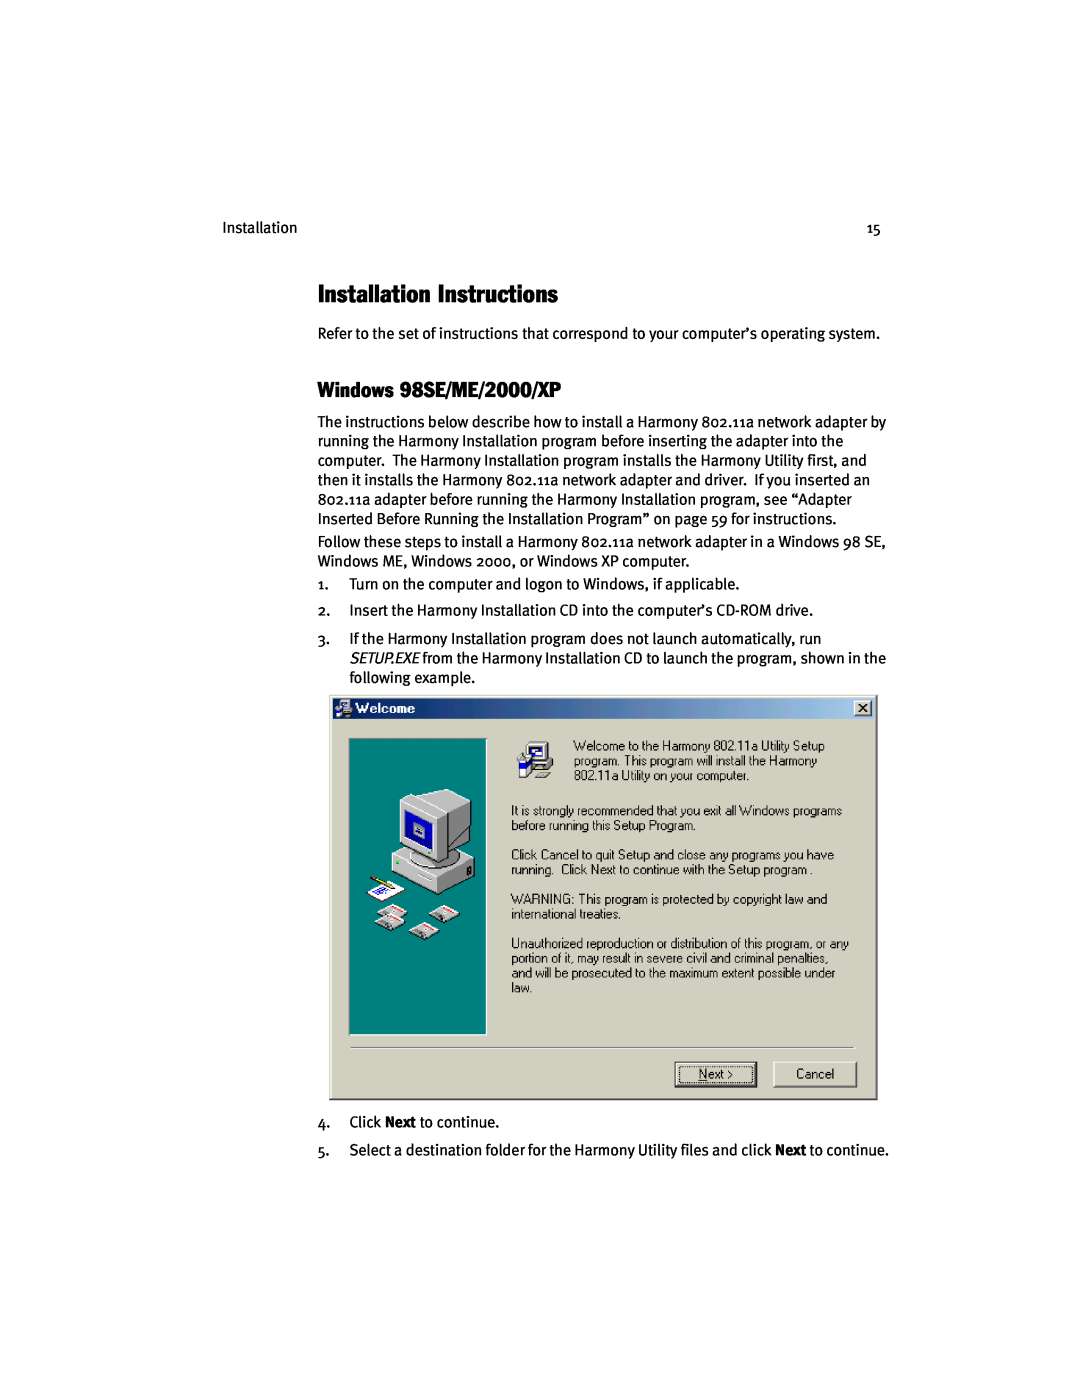 Harmony House 802.11a manual Installation Instructions, Windows 98SE/ME/2000/XP 